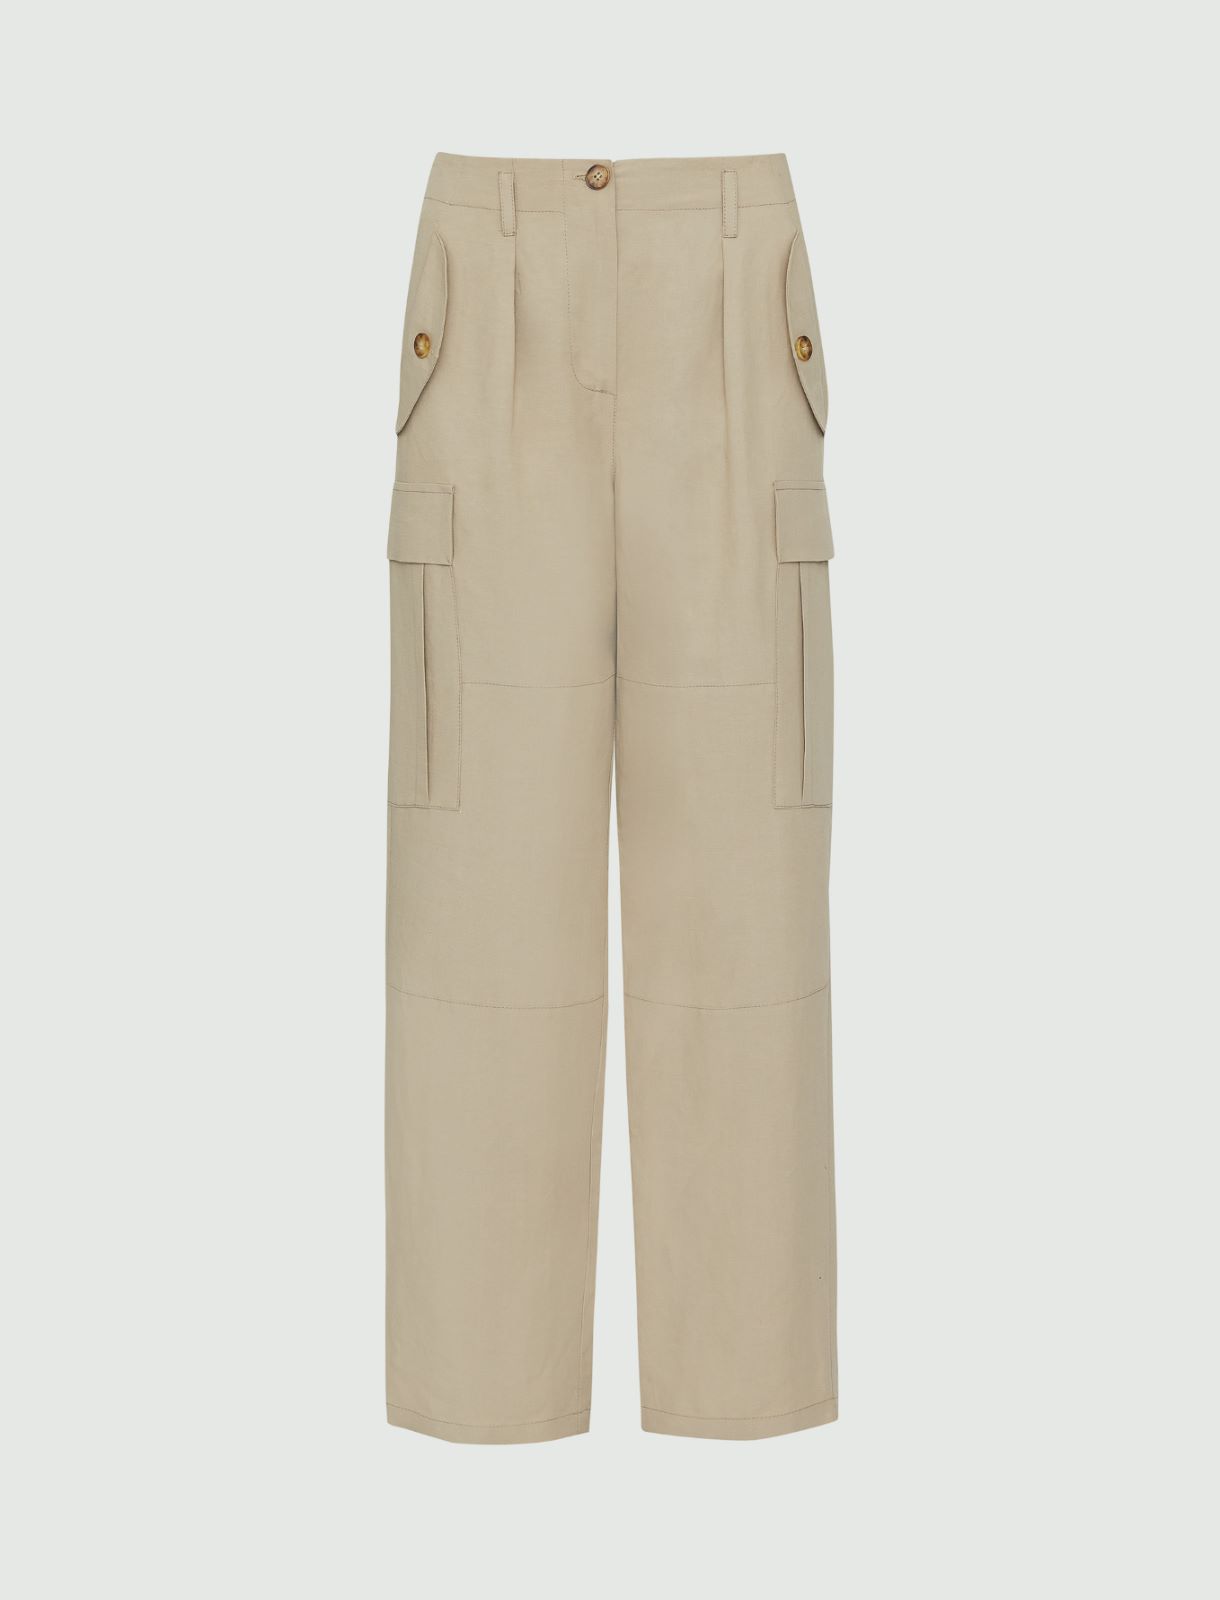 Polo Ralph Lauren Beachcombr cotton canvas cargo trousers in deckwash white   ASOS